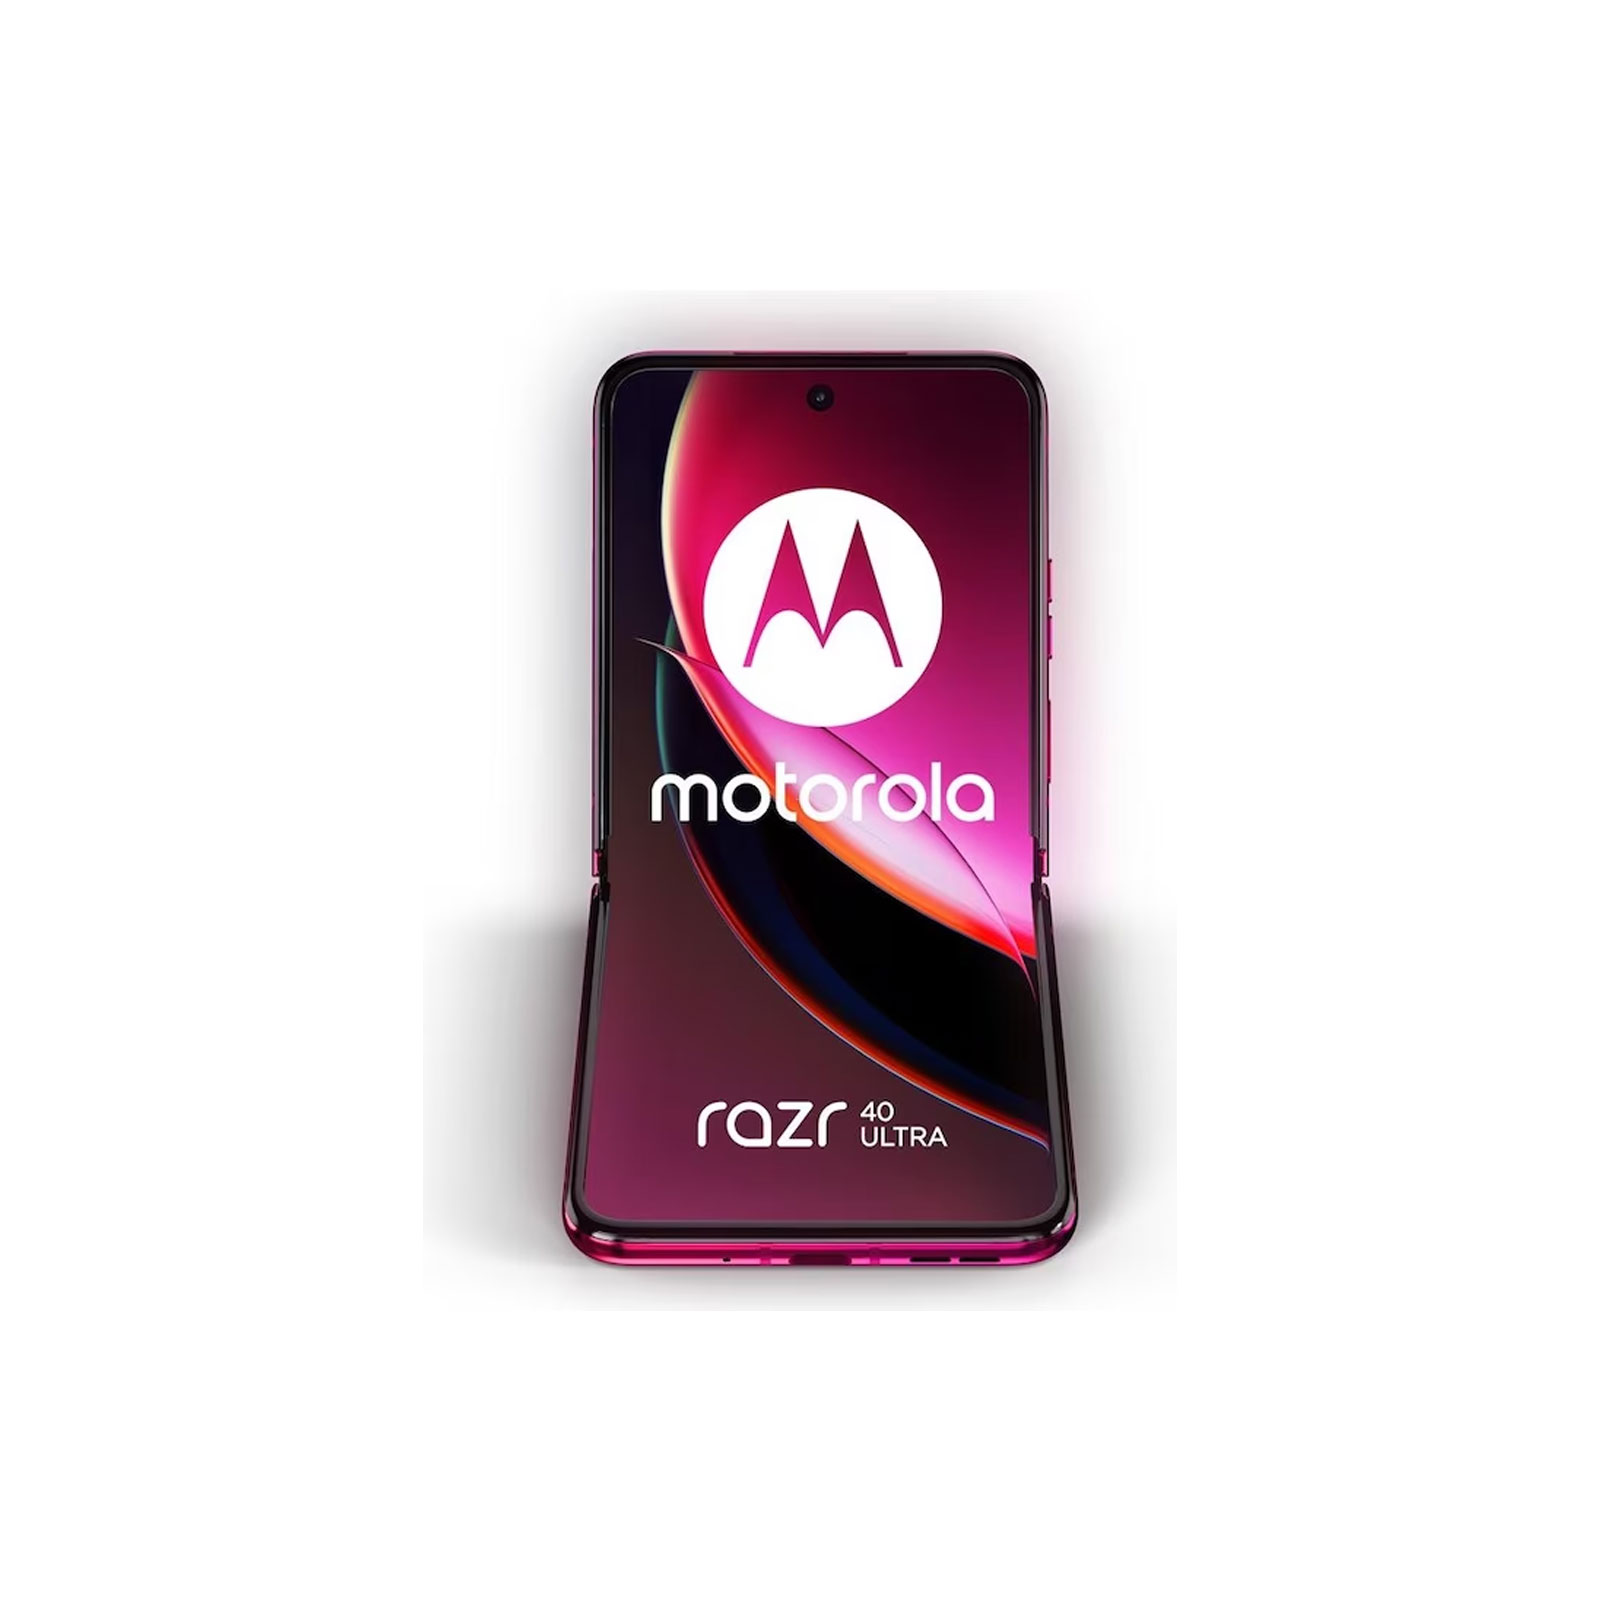 Motorola razr40 ultra